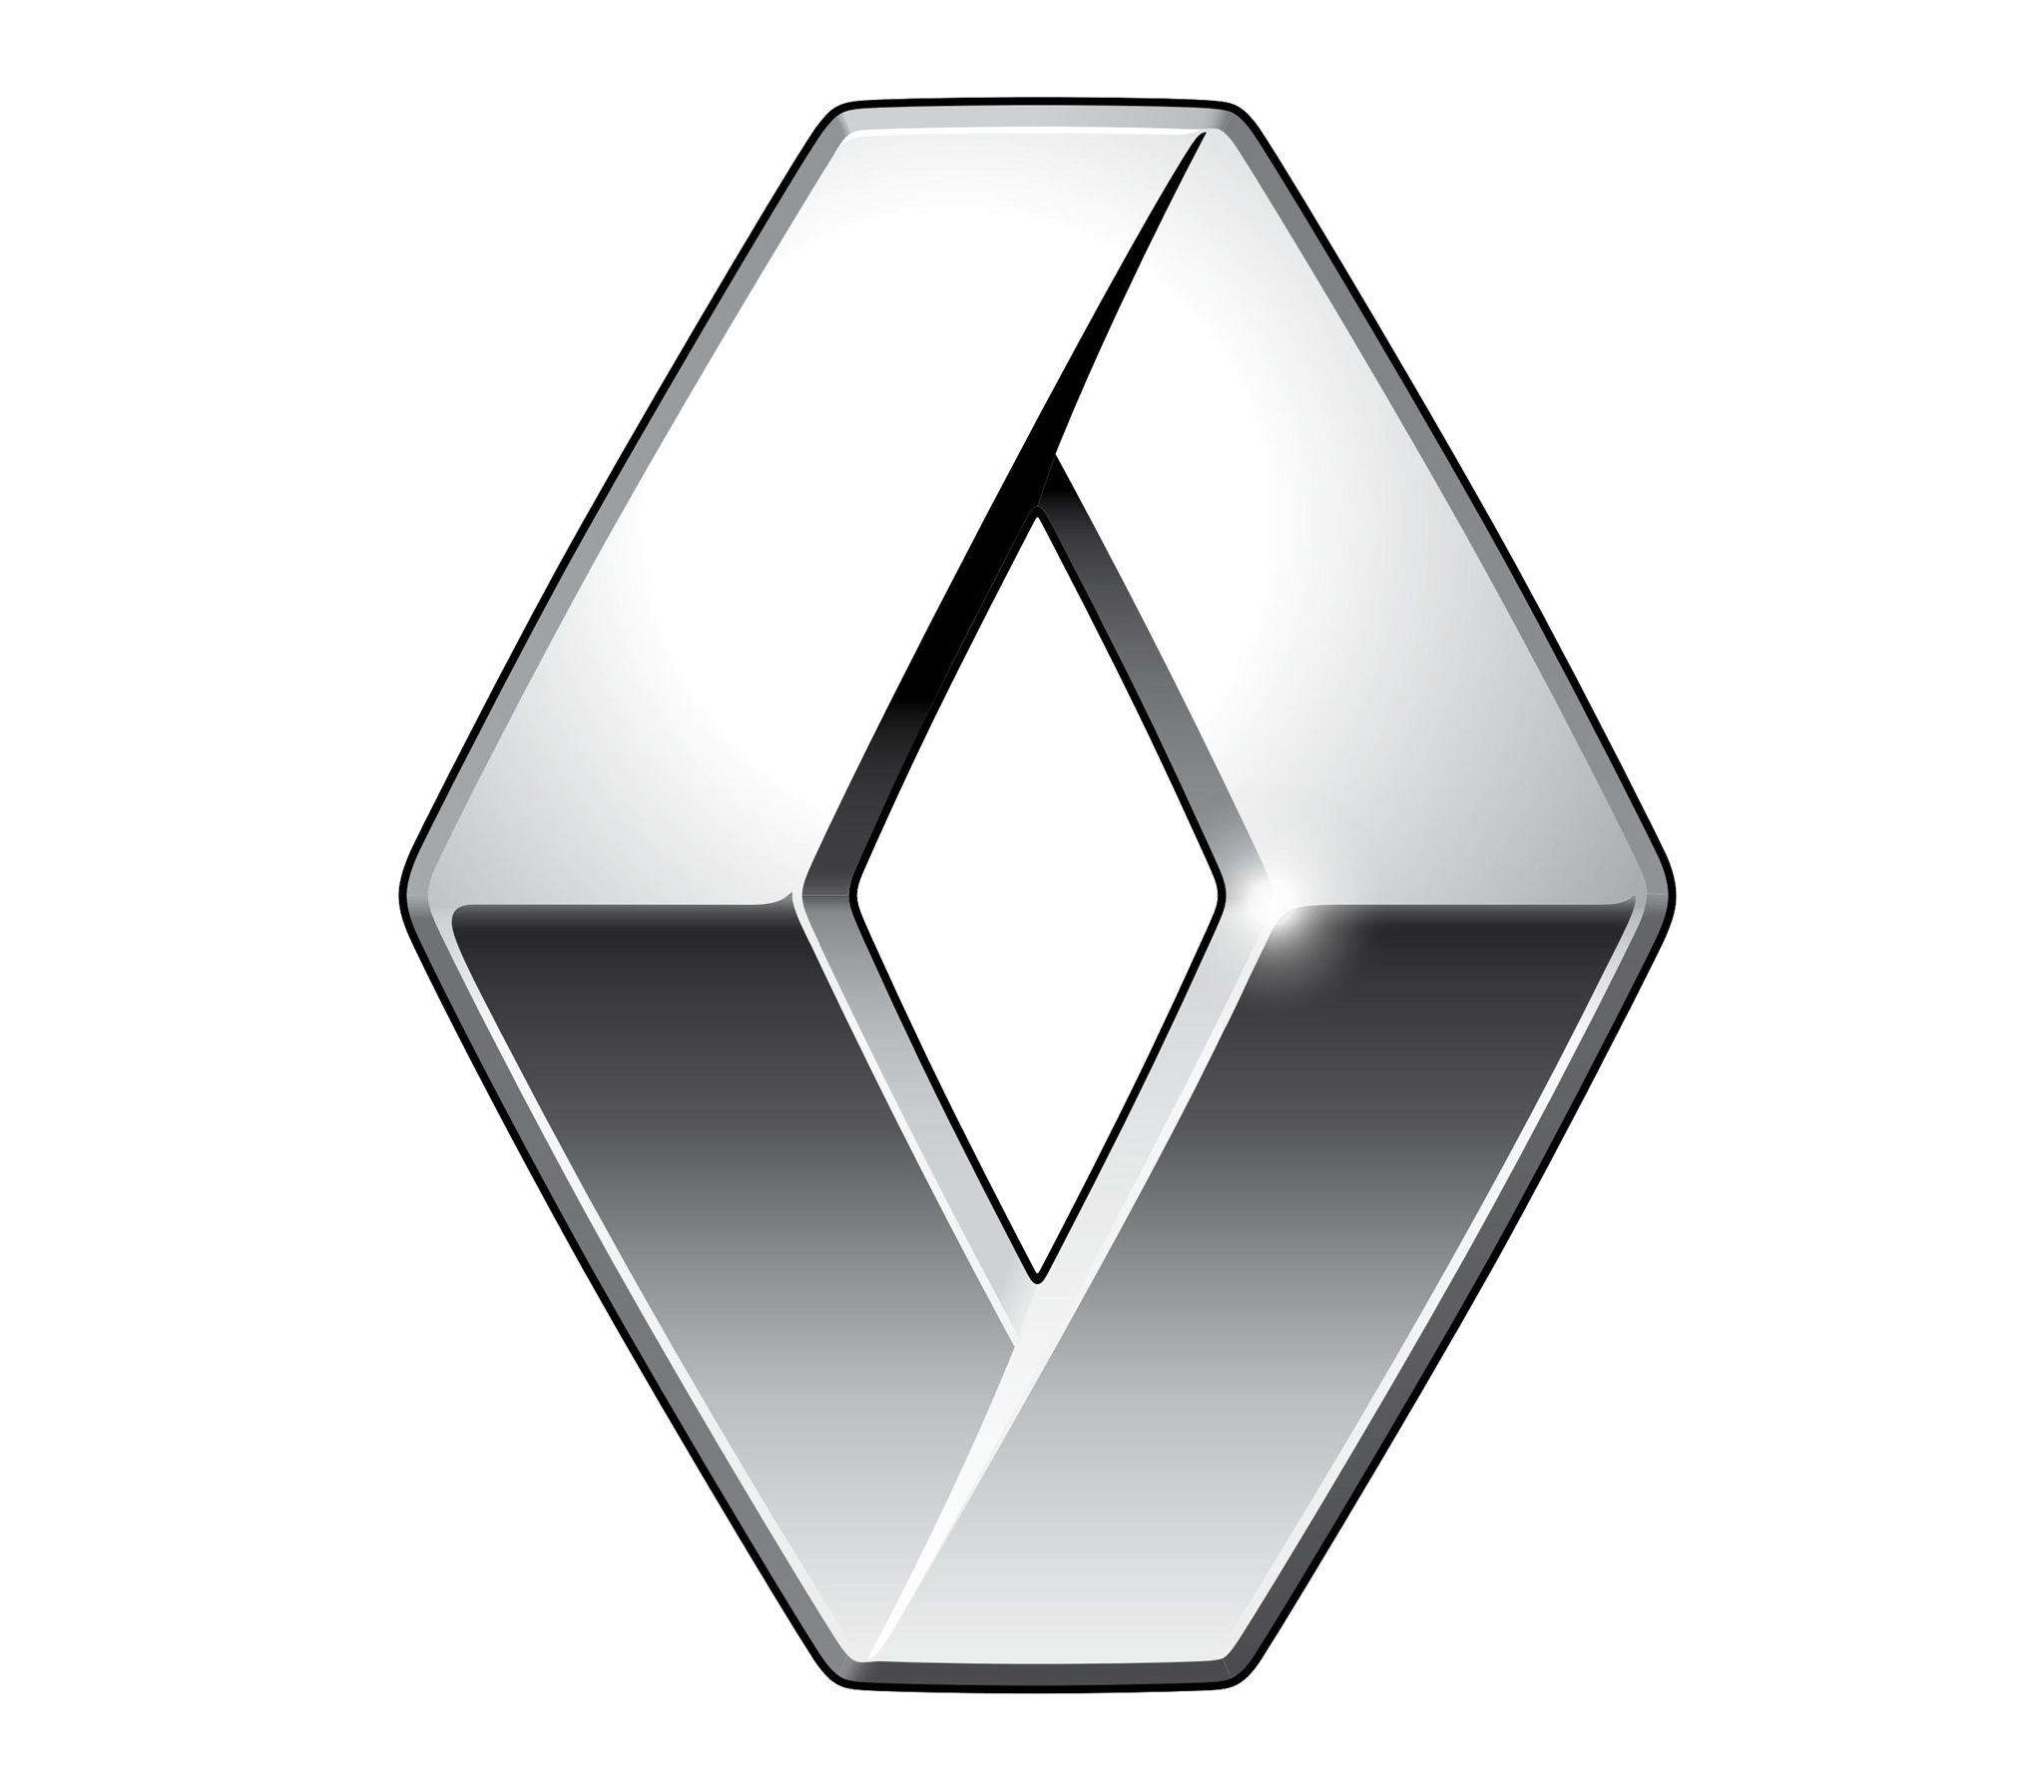 Renault Espace autoliising | Sixt Leasing